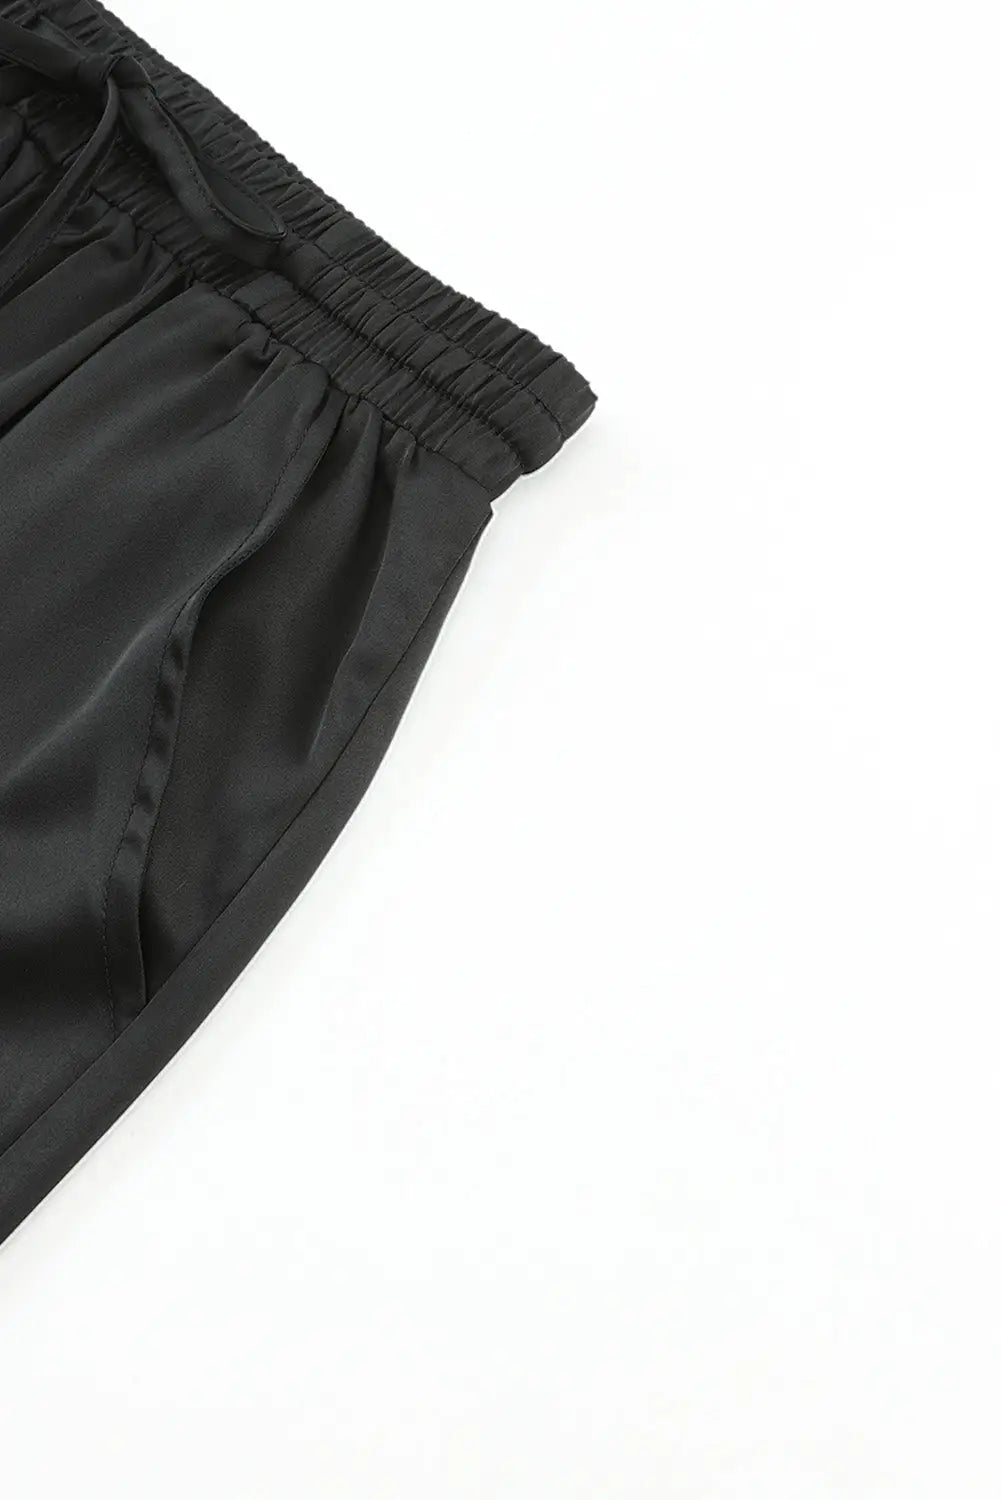 Black satin pocketed drawstring elastic waist pants - cargo